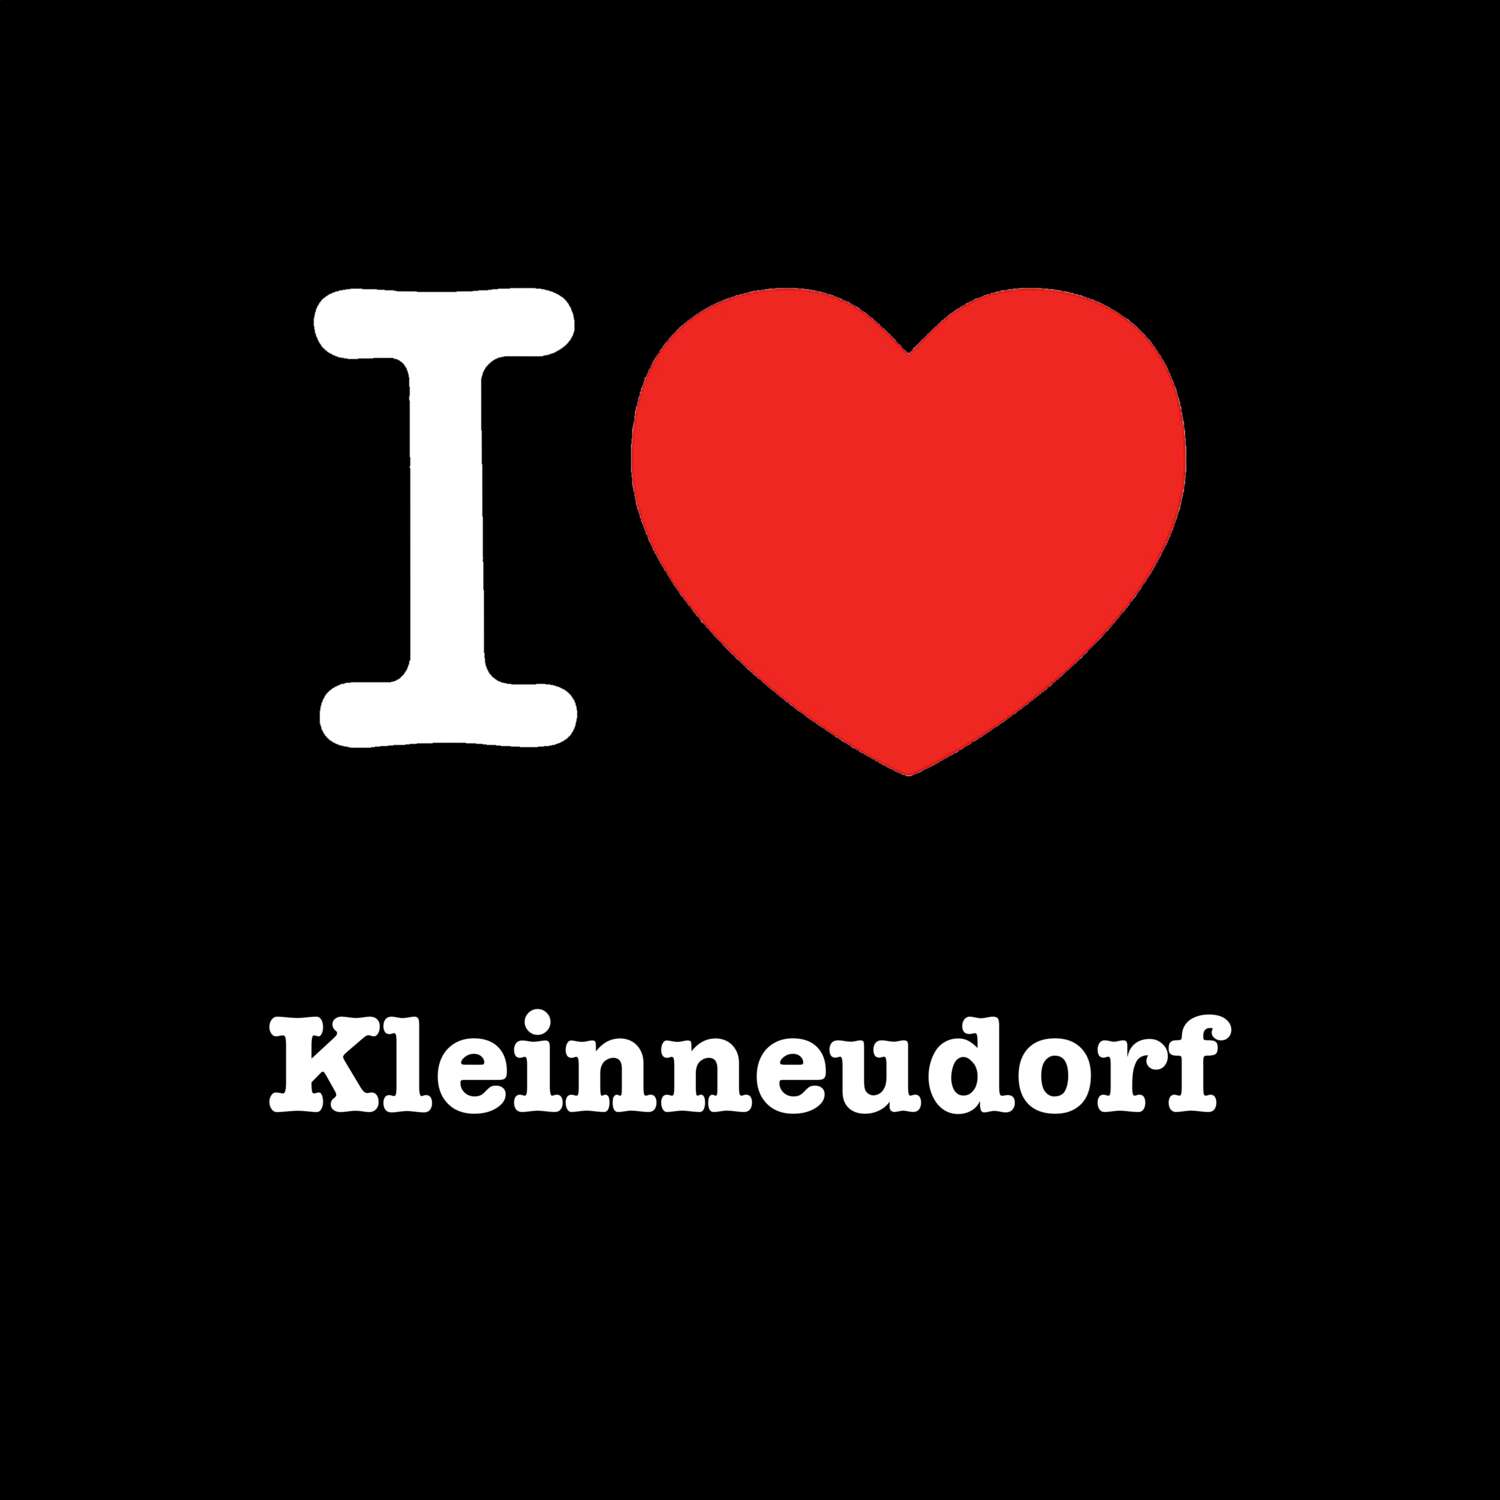 Kleinneudorf T-Shirt »I love«